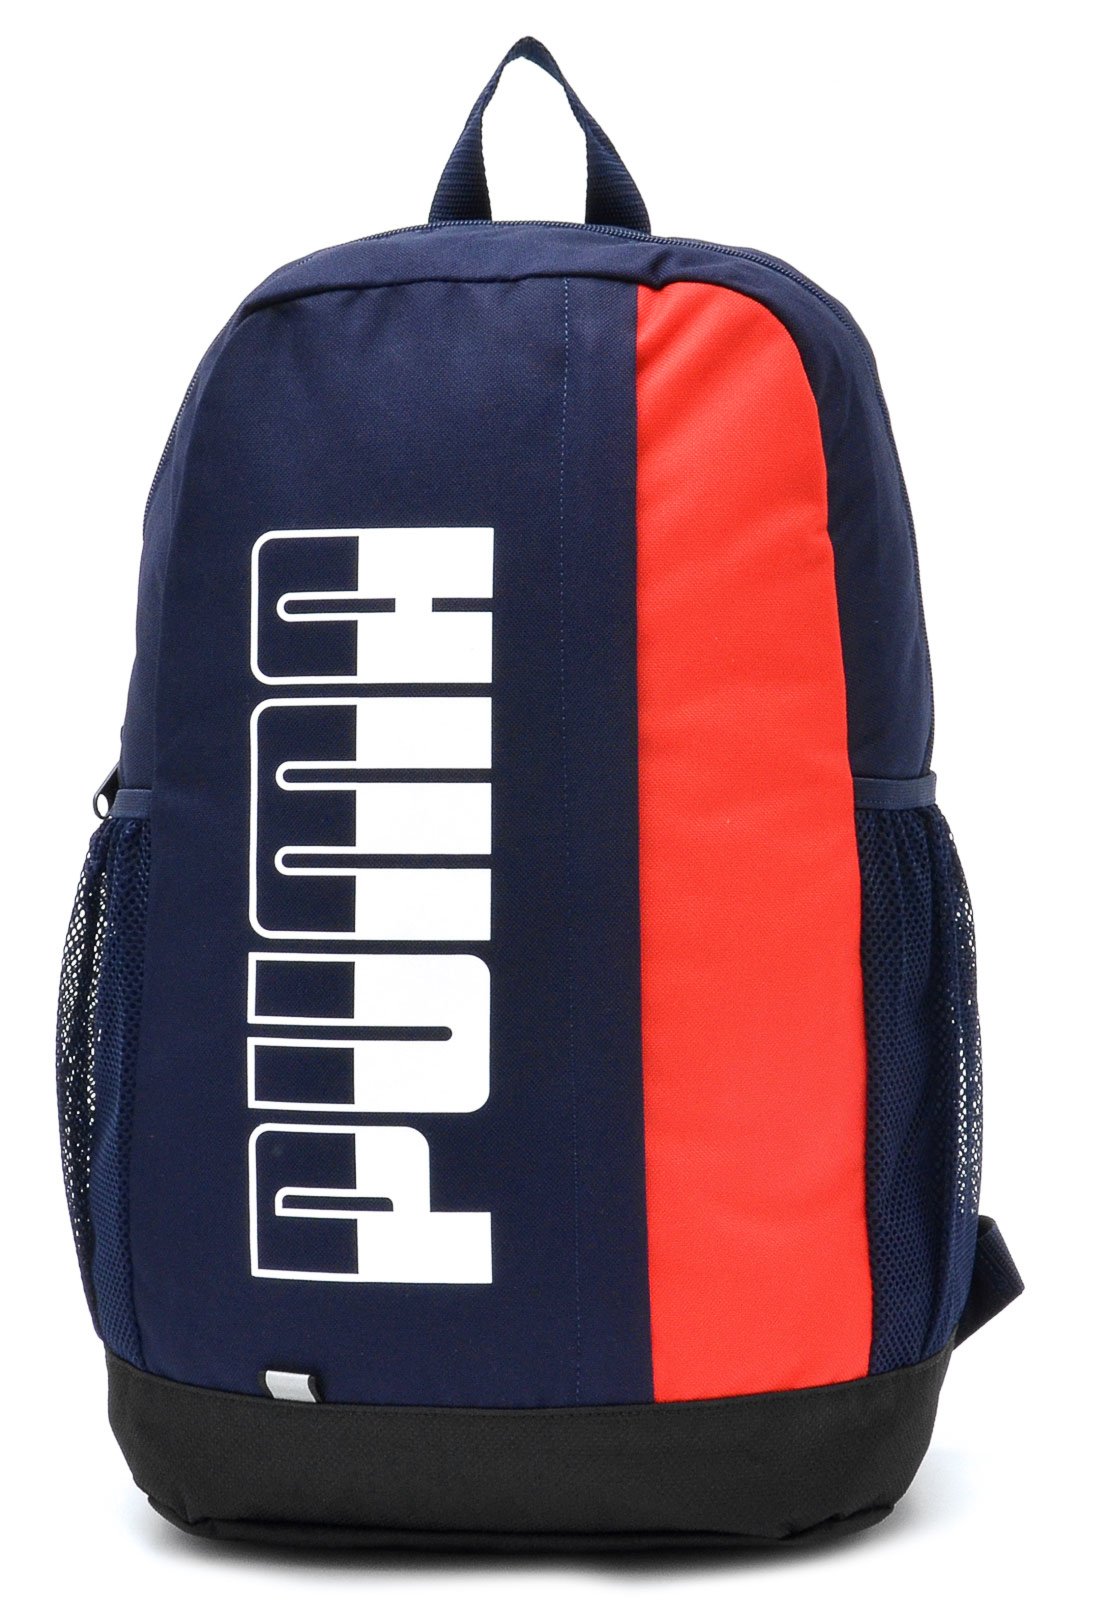 mochila puma backpack